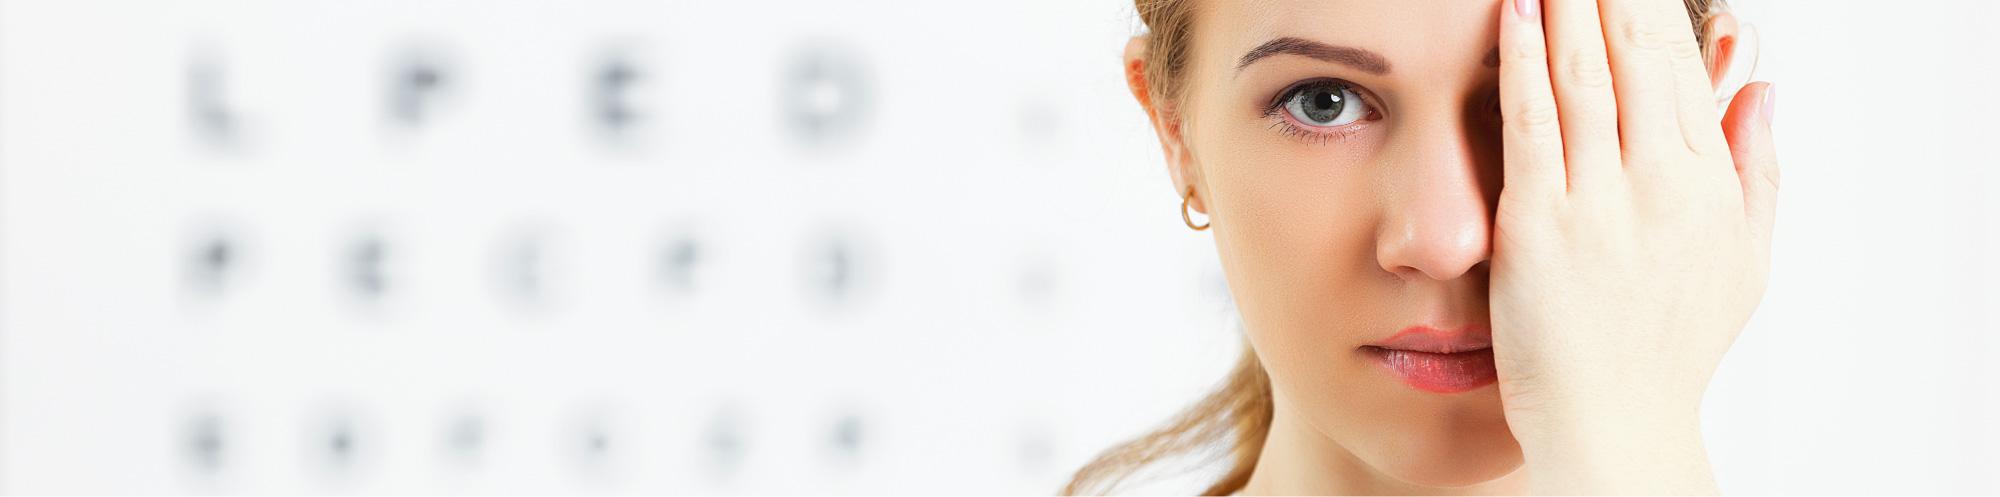 Diabetes & Auge - Augenarztpraxis Buchen